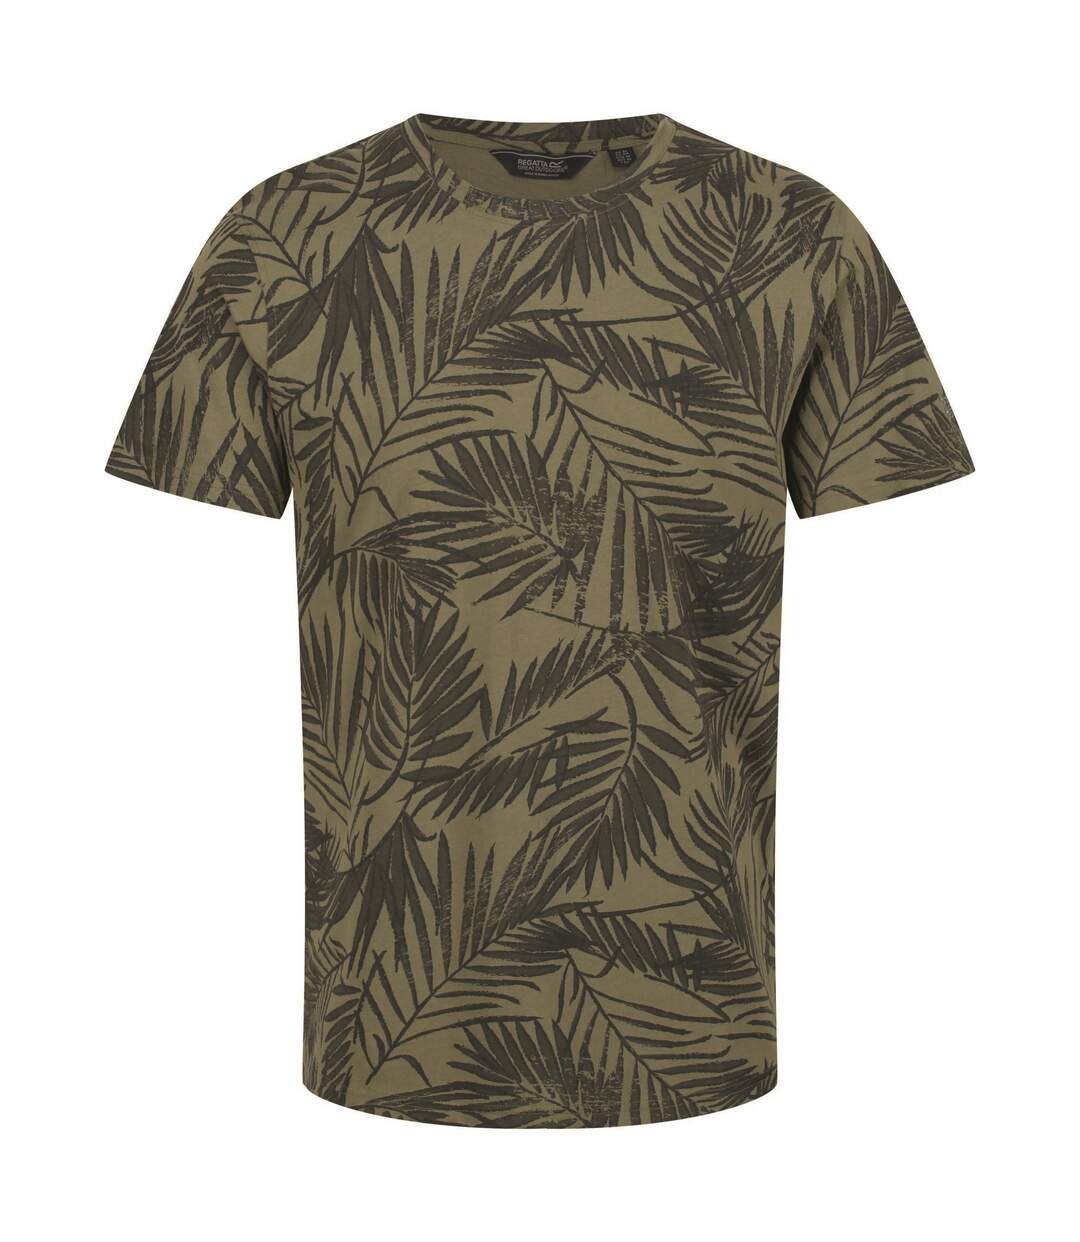 Regatta - T-shirt CLINE - Homme (Vert kaki) - UTRG6818